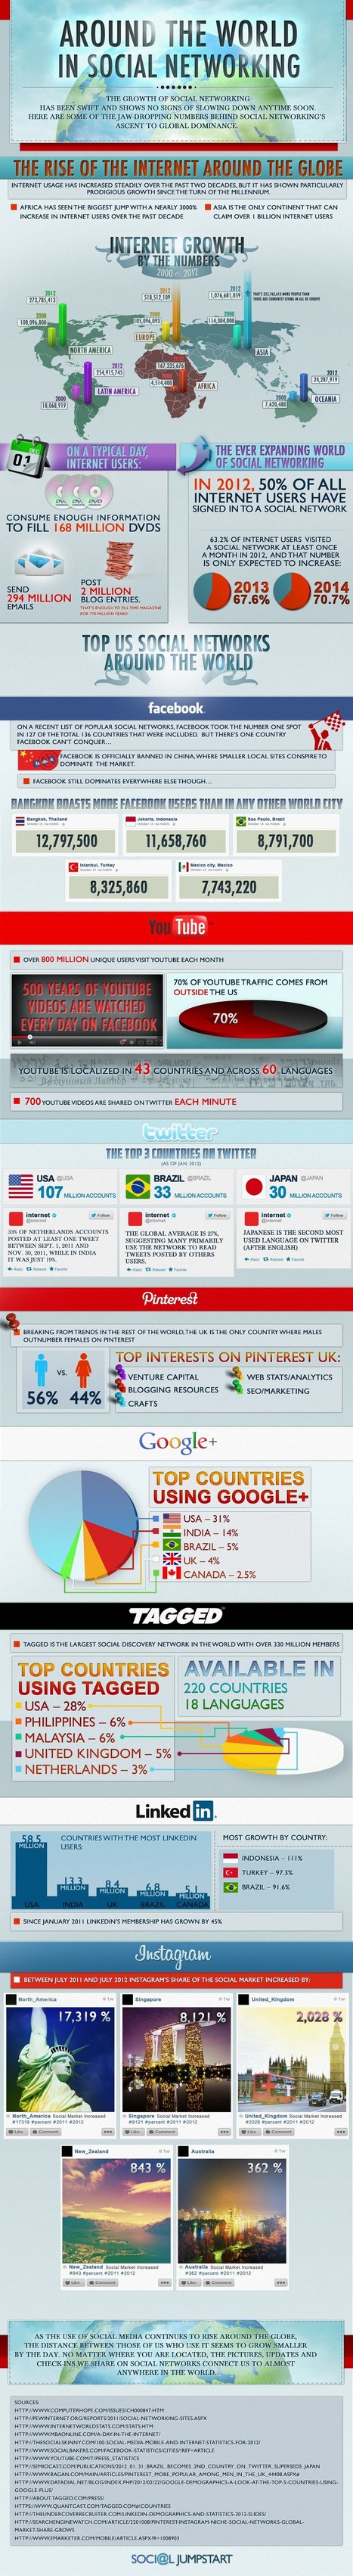 Social Media Around the World: A Complete Infographic Guide | Aprendiendo a Distancia | Scoop.it